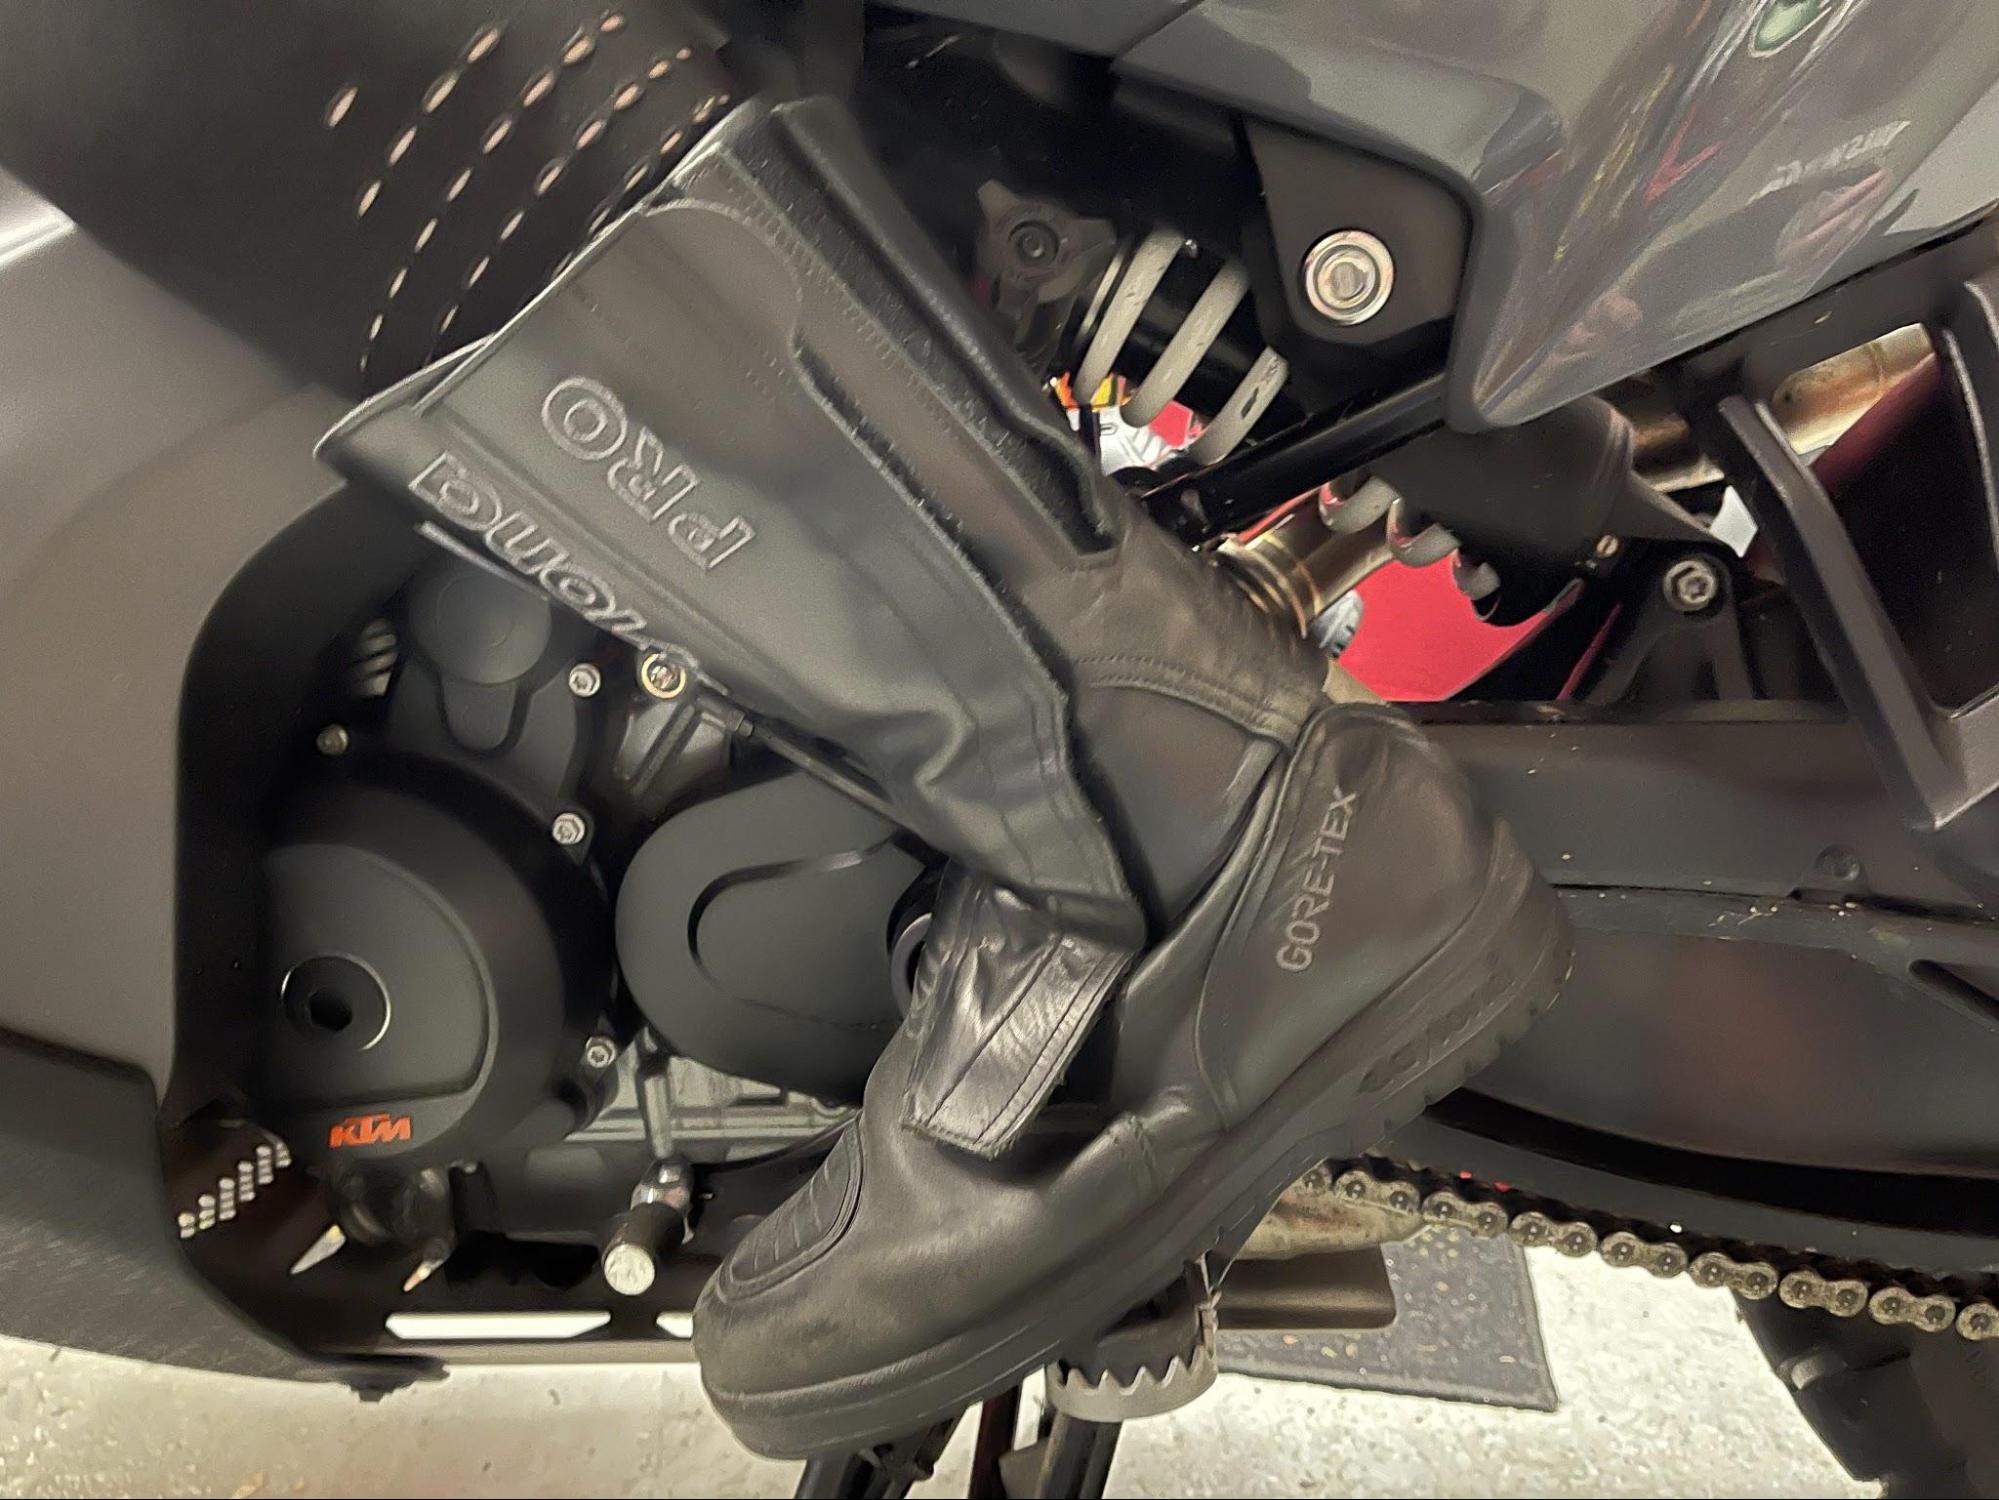 Rider wearing Daytona Travel Star Pro GTX boots